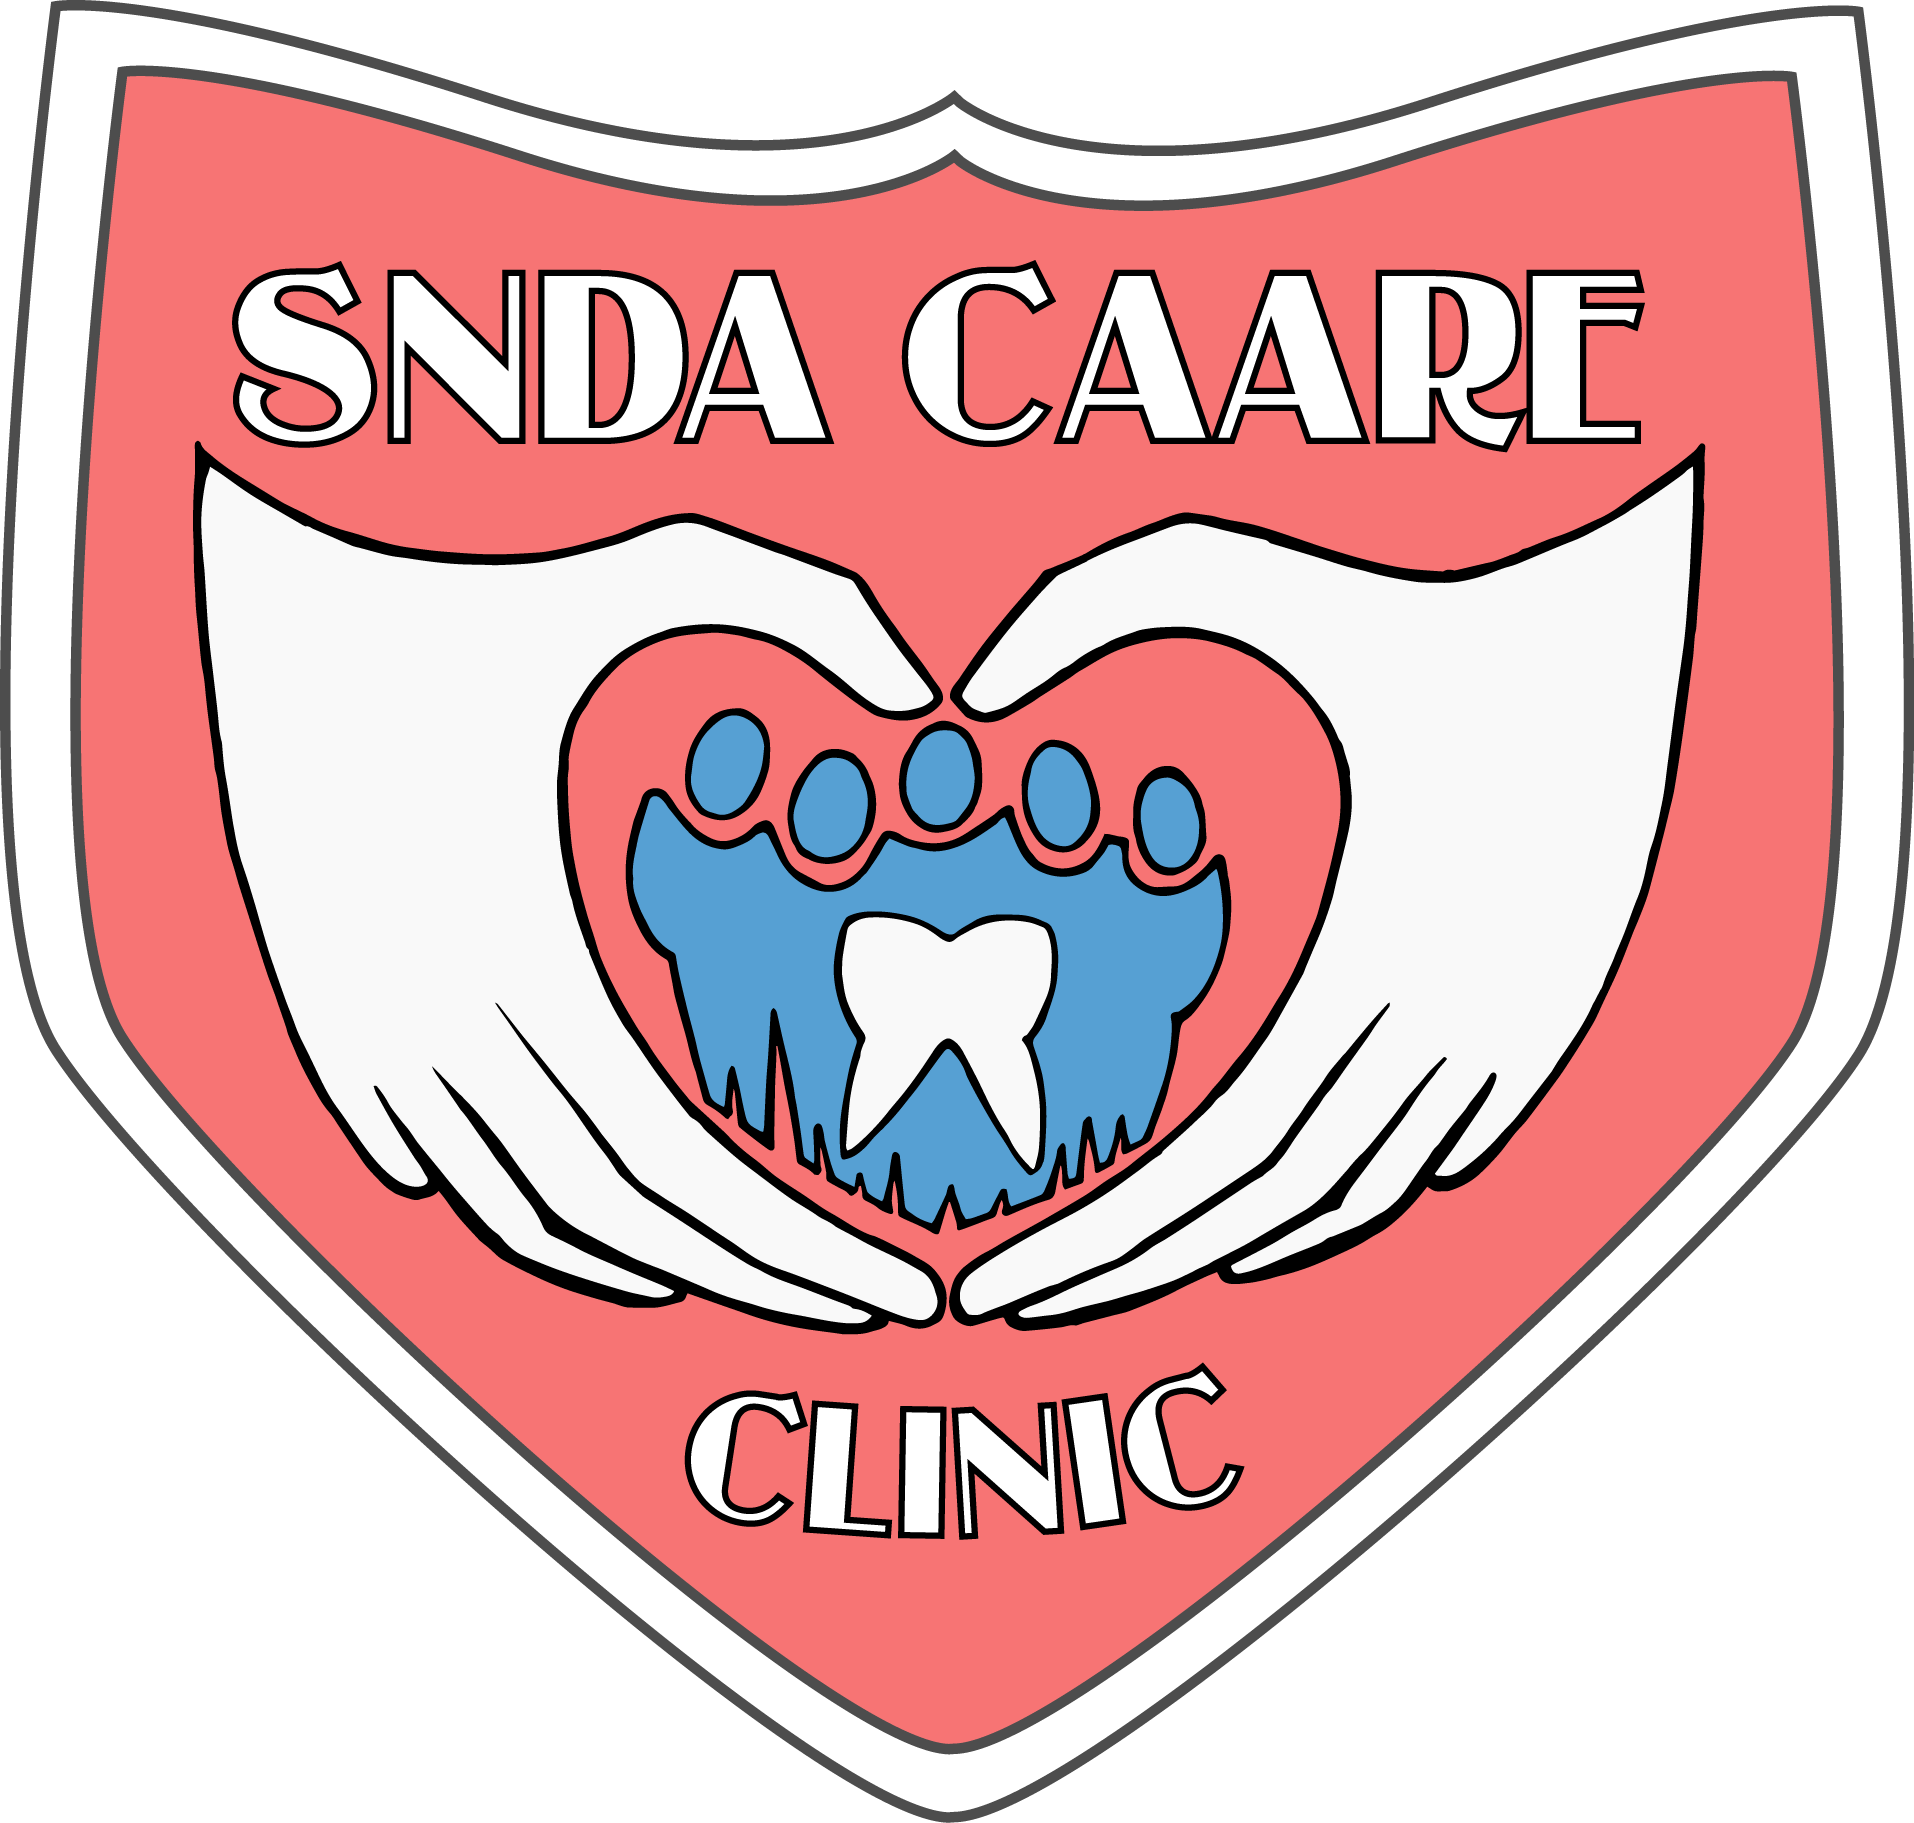 CAARE Clinic | Student National Dental Association